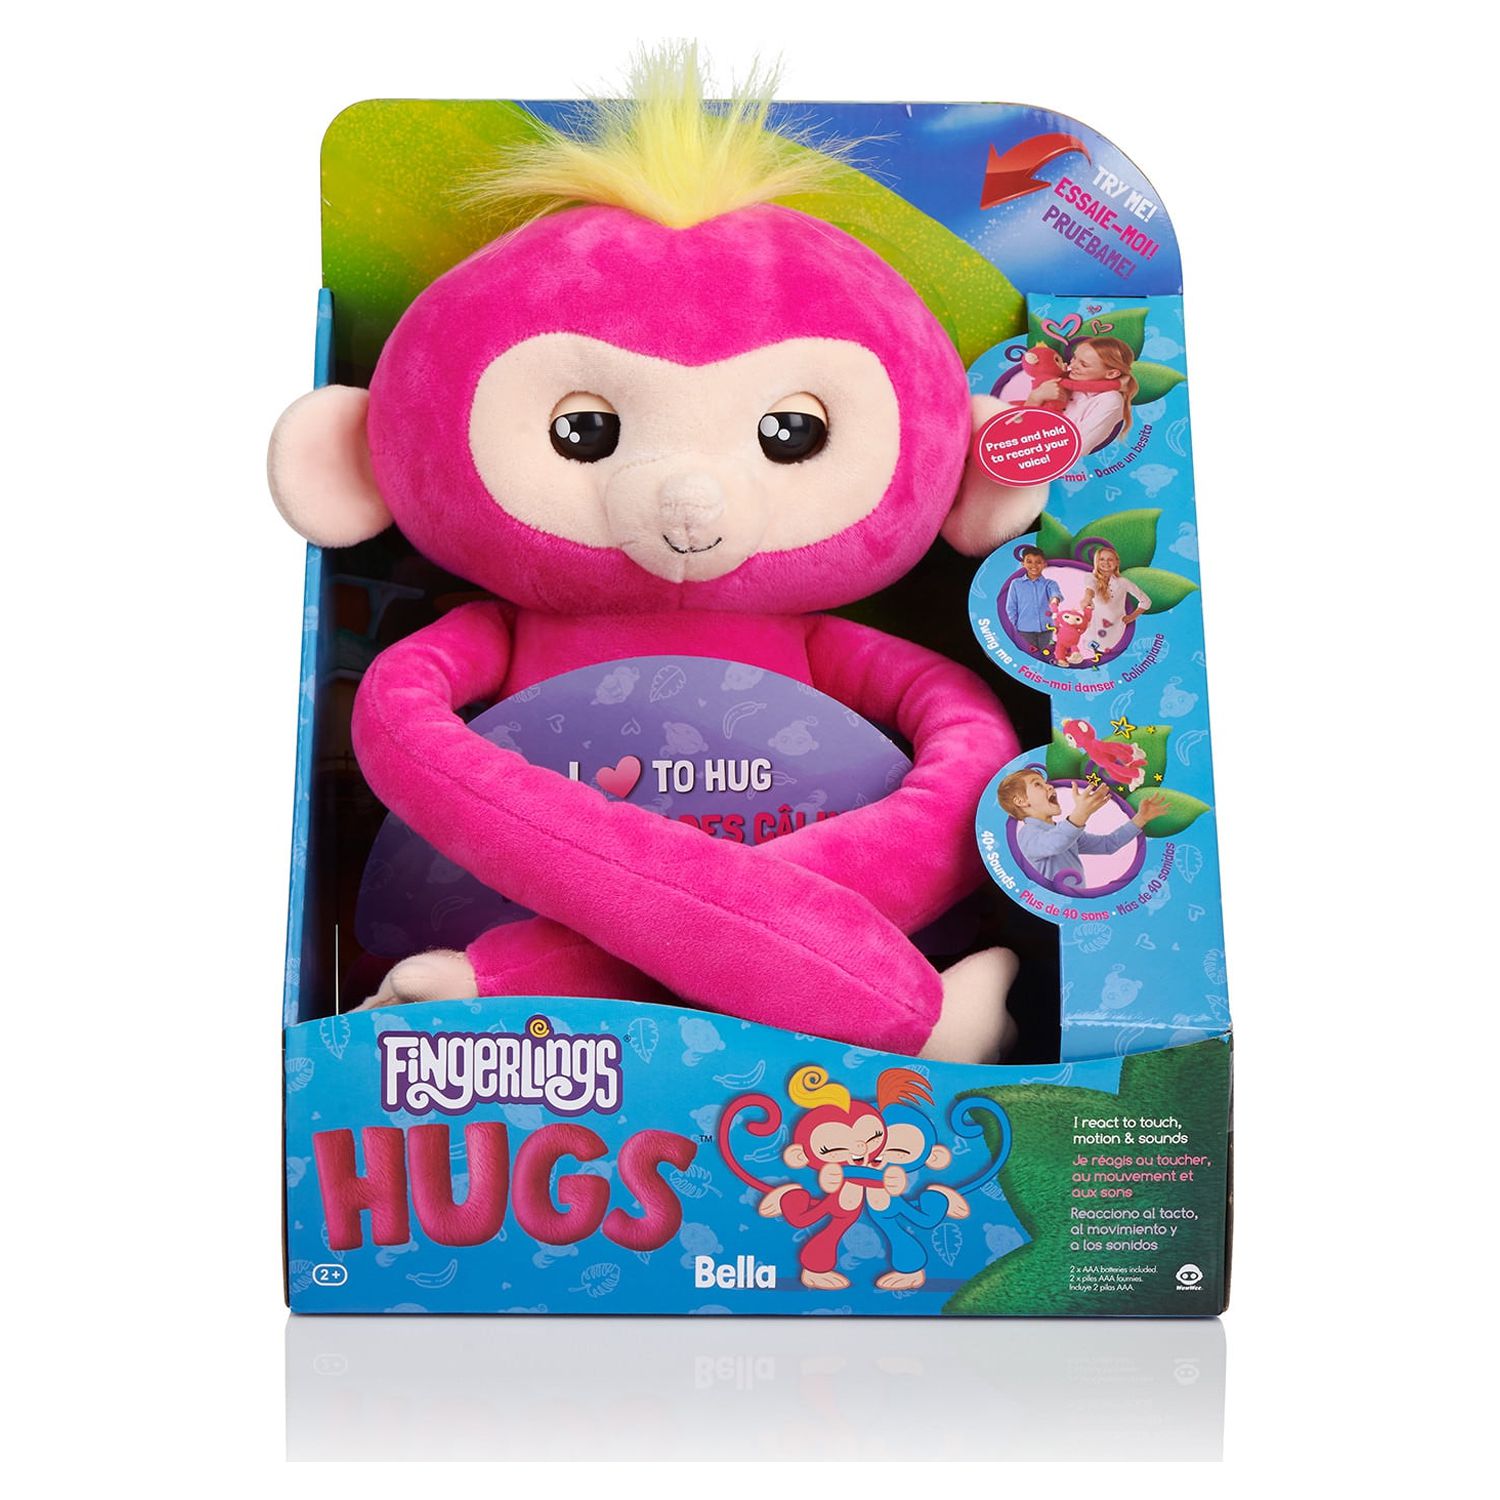 Fingerlings HUGS - Bella (Pink) - Interactive Plush Monkey by WowWee - image 4 of 9